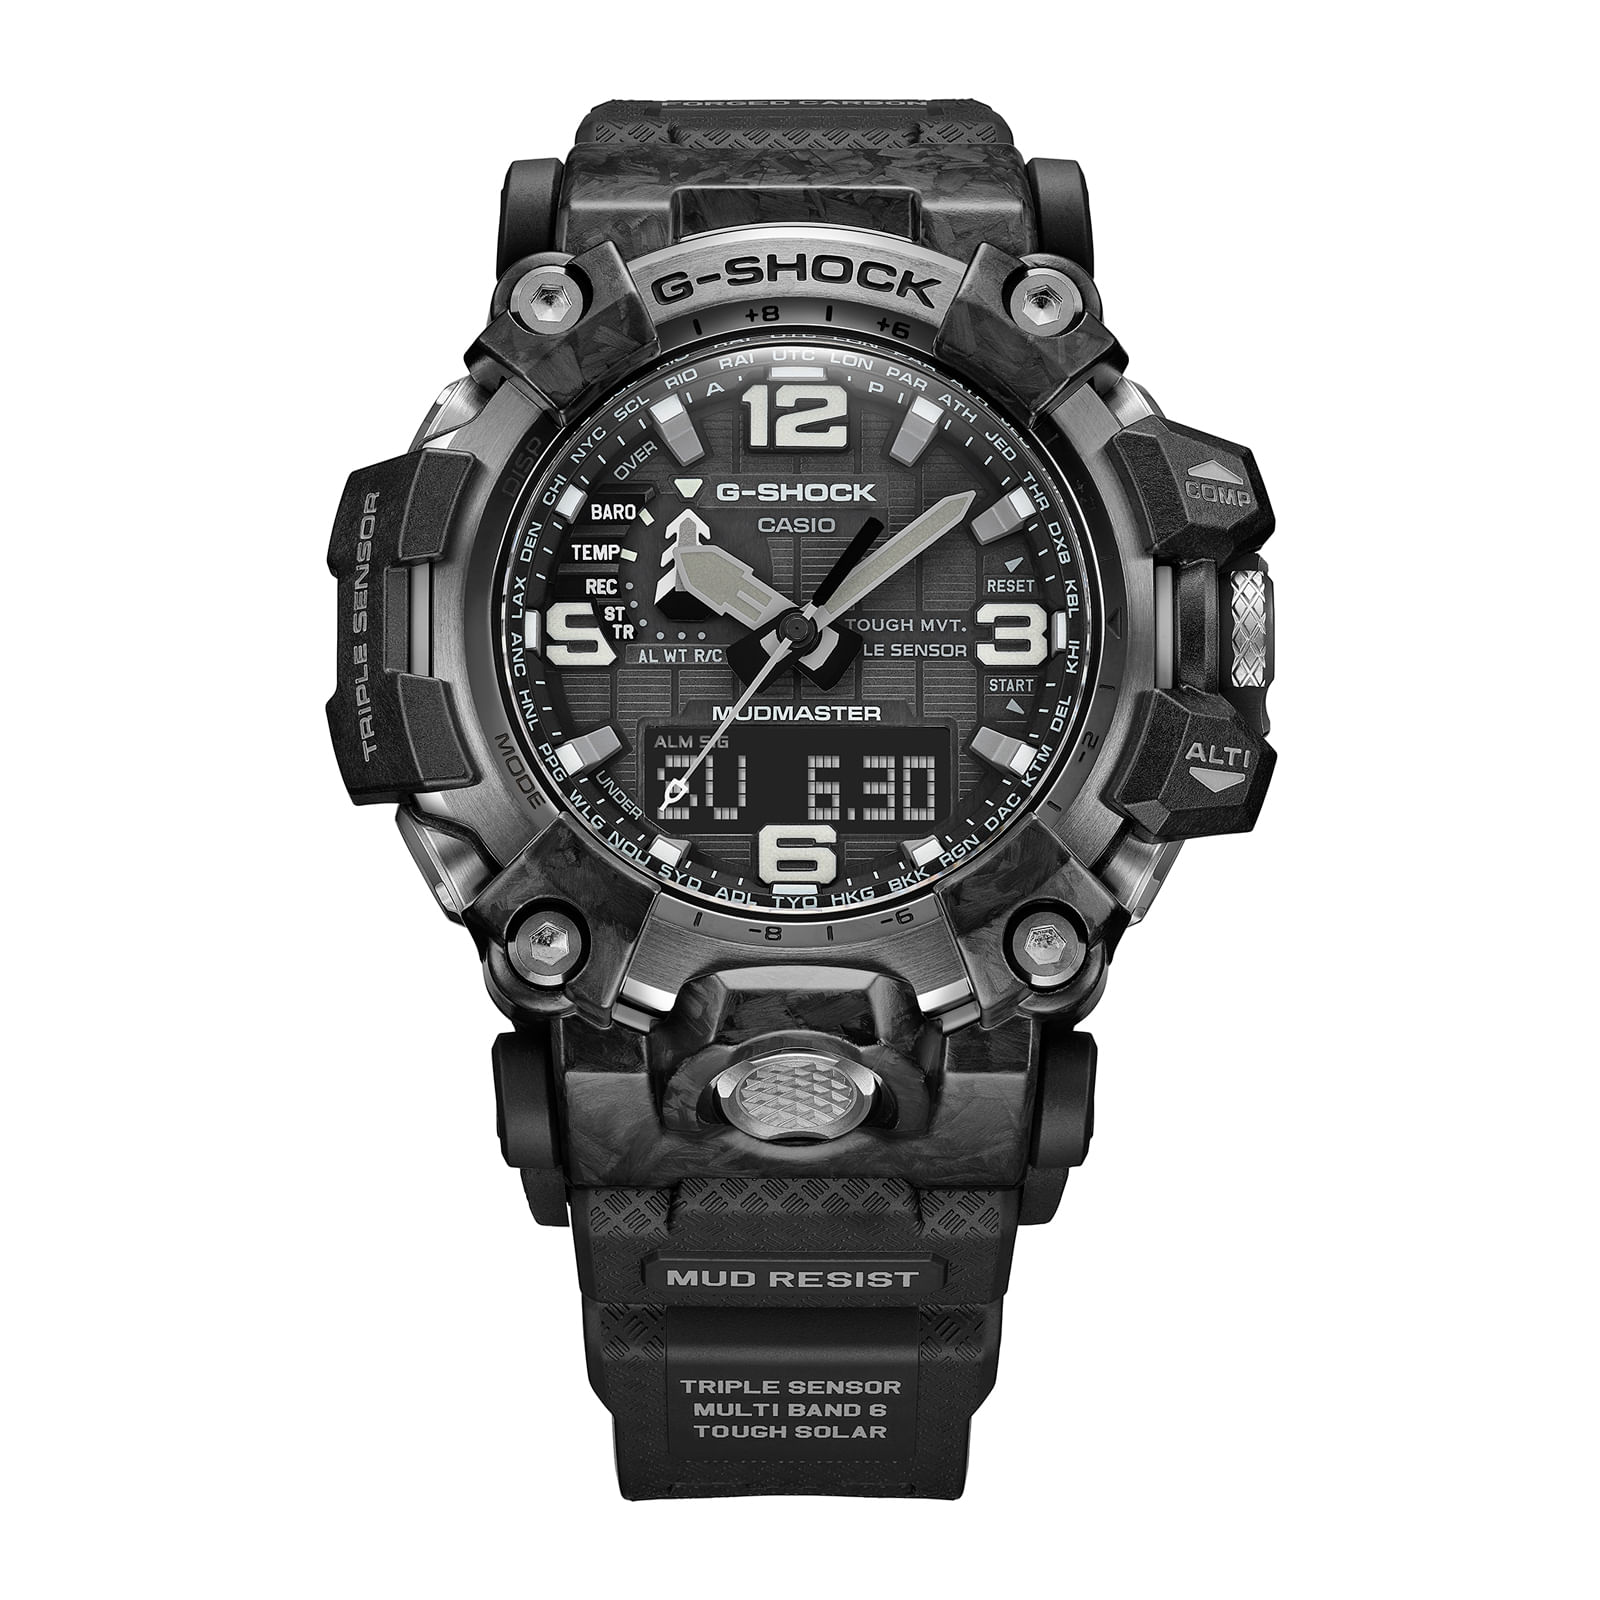 Reloj G-SHOCK GWG-2000-1A1 Resina/Acero Hombre Negro